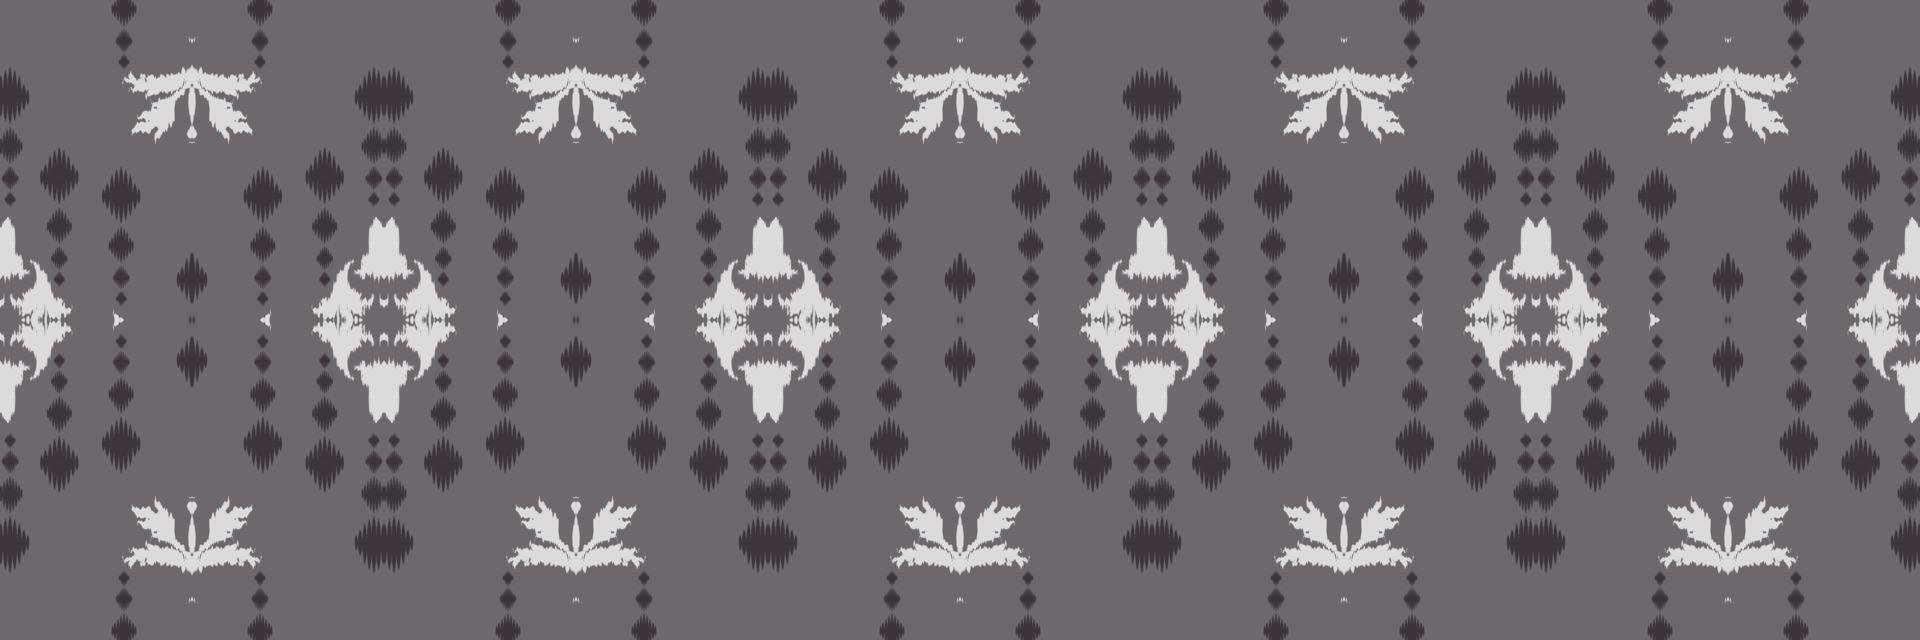 Batik Textile Ethnic ikat prints seamless pattern digital vector design for Print saree Kurti Borneo Fabric border brush symbols swatches cotton